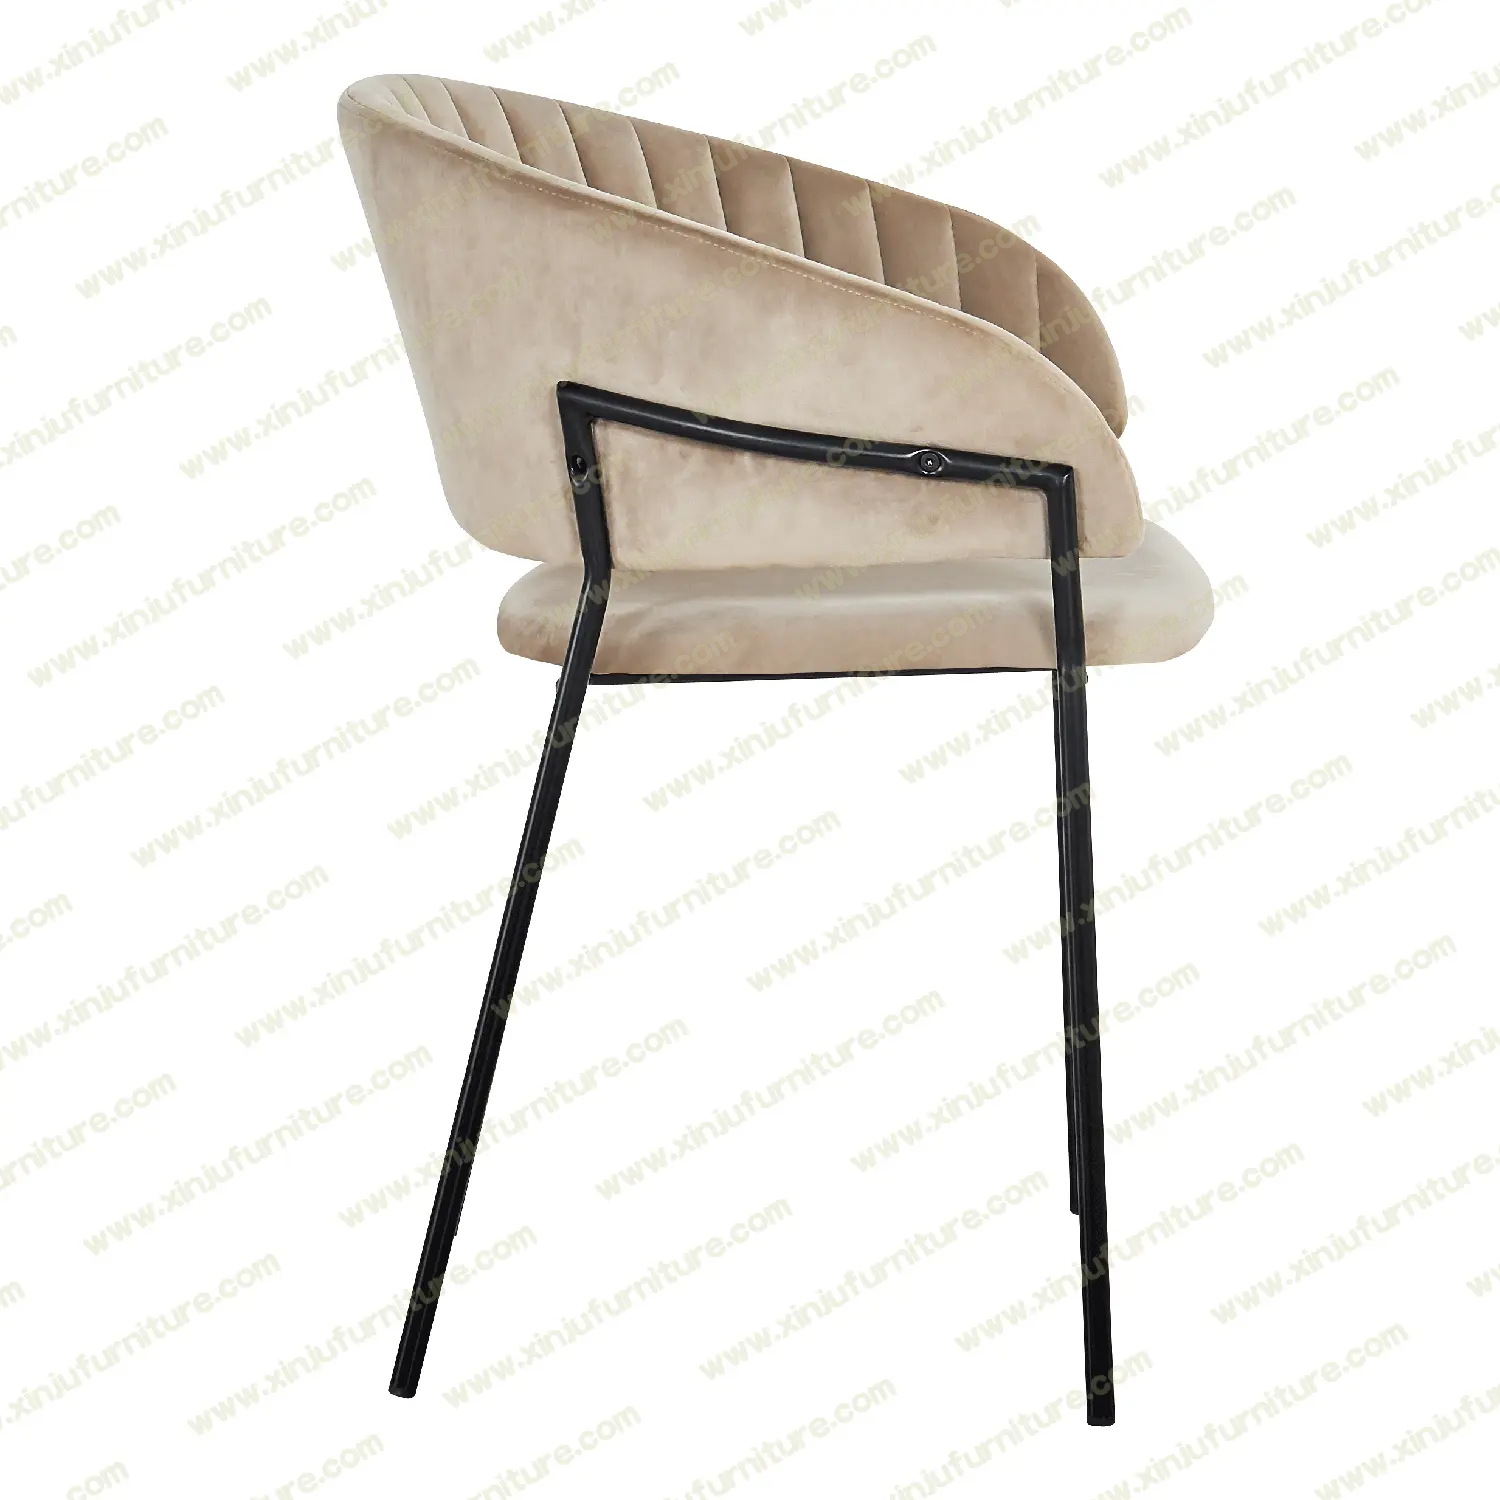 Simple modern Beige dining chair